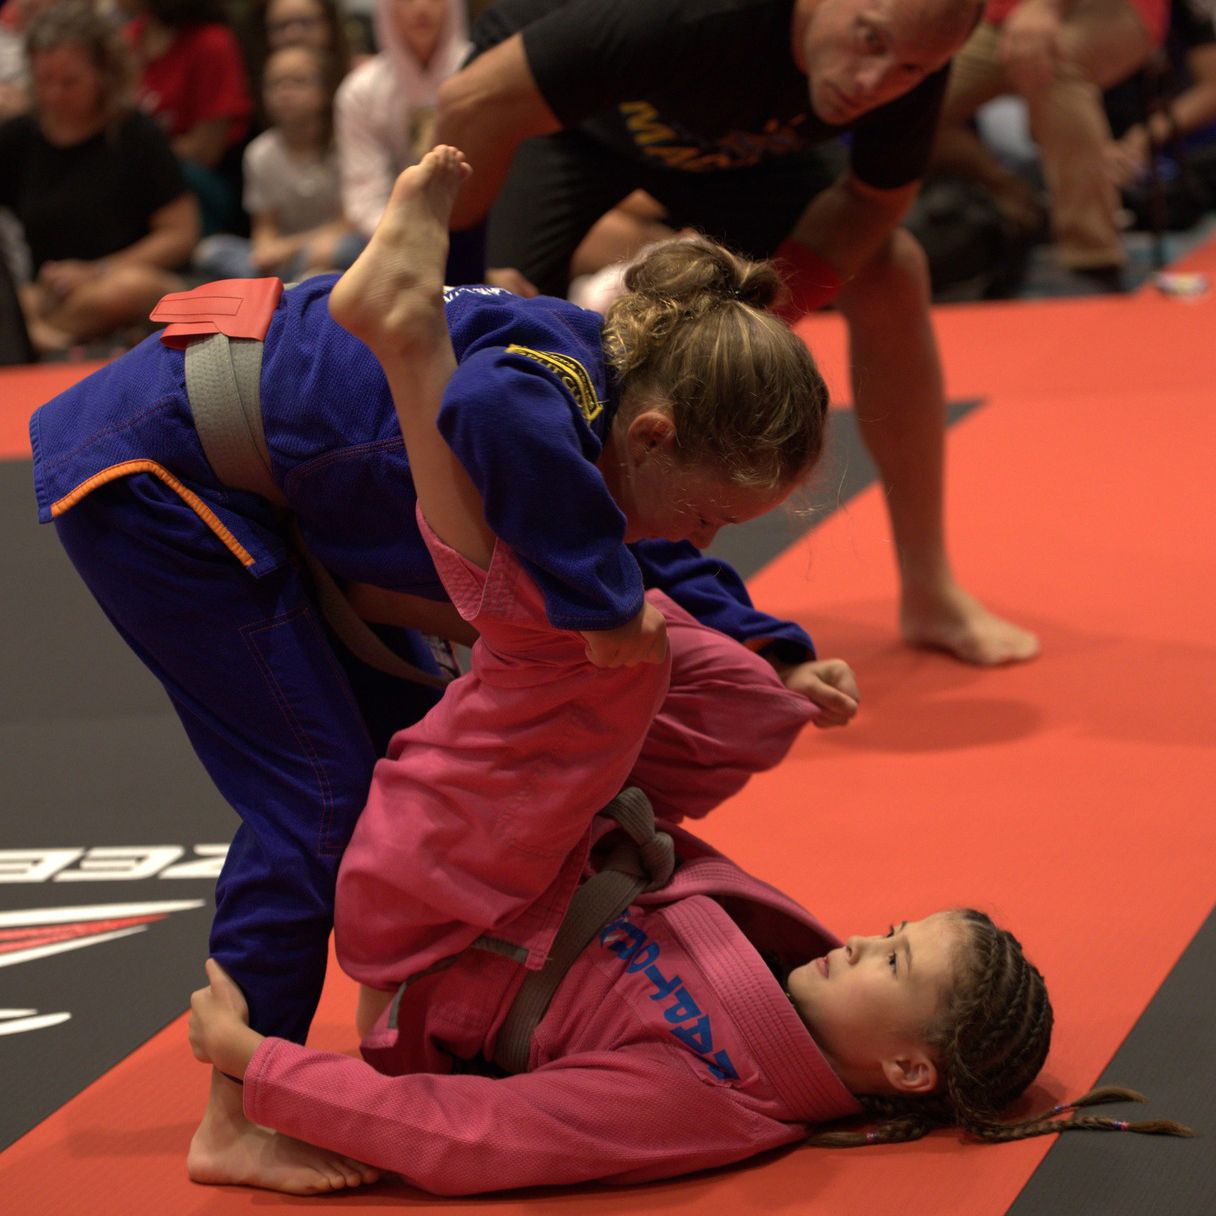 A girl in a pink jiu jitsu uniform is laying on the ground